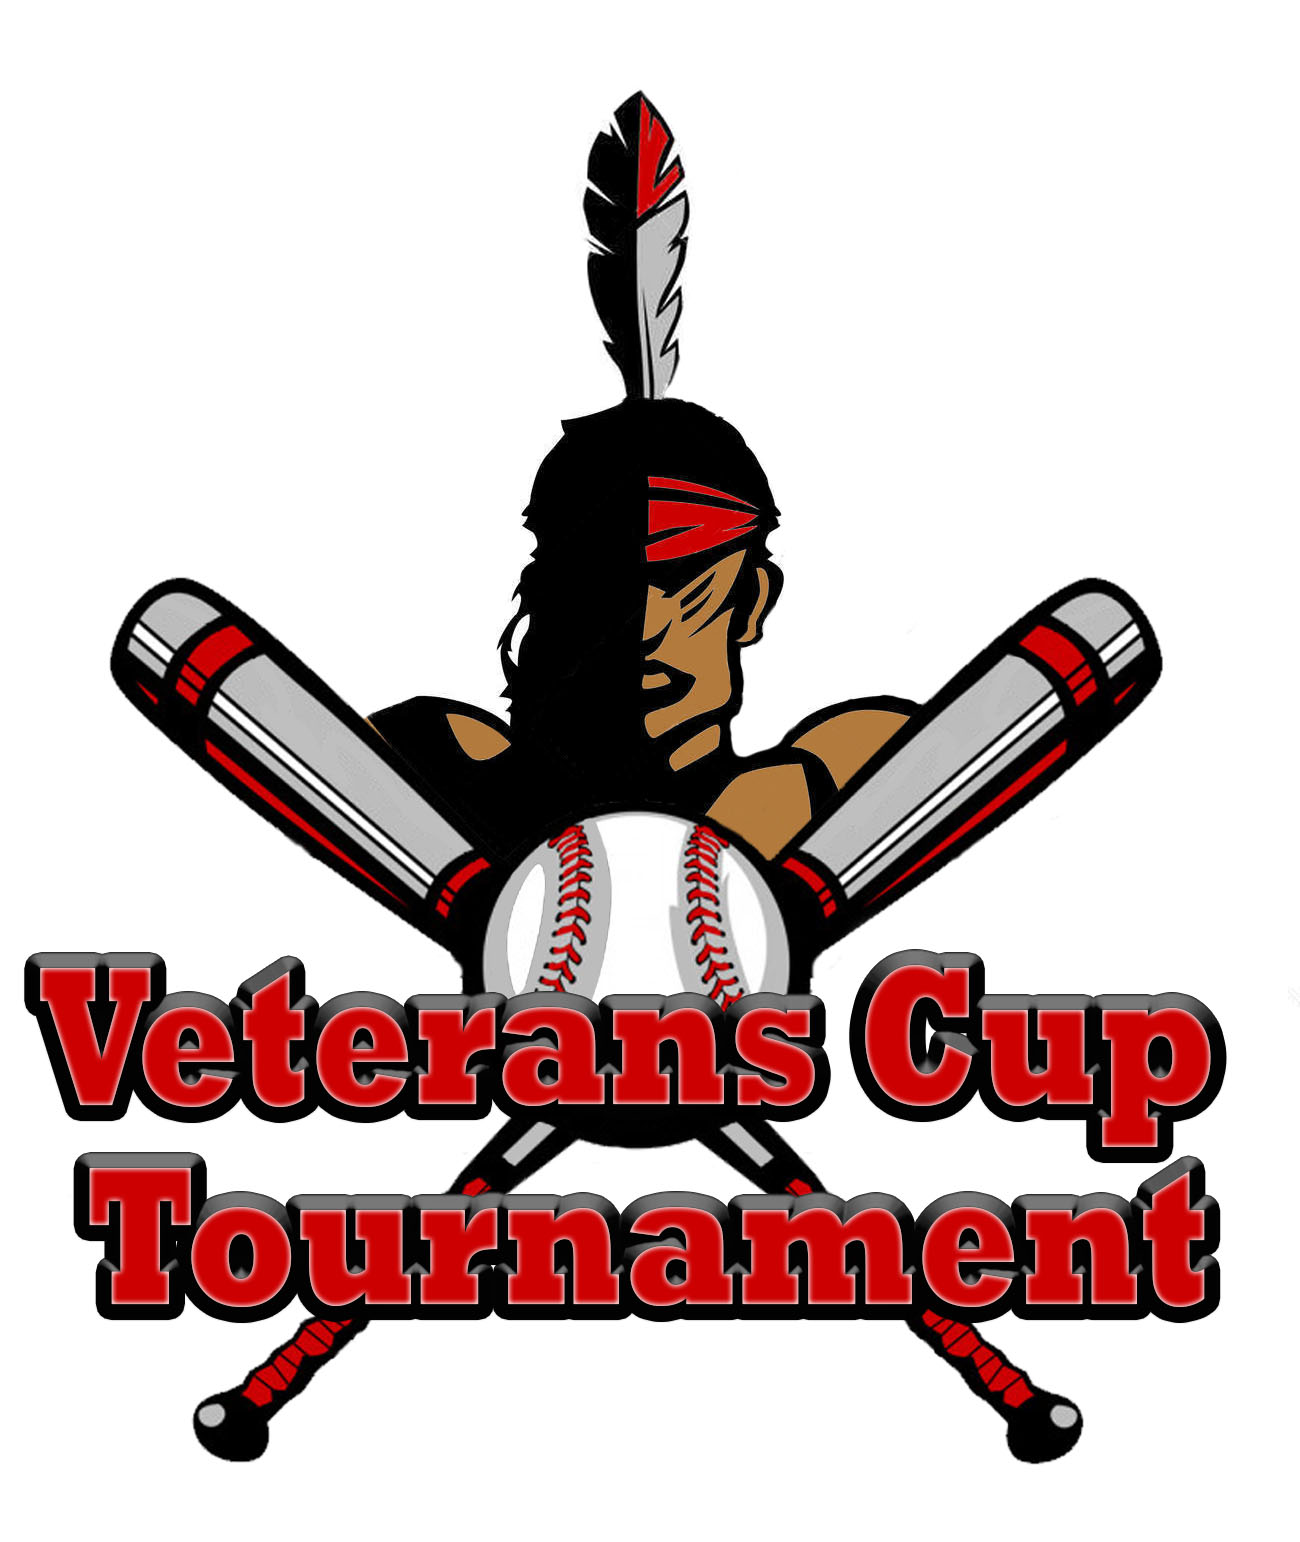 Veterns Cup Tournament